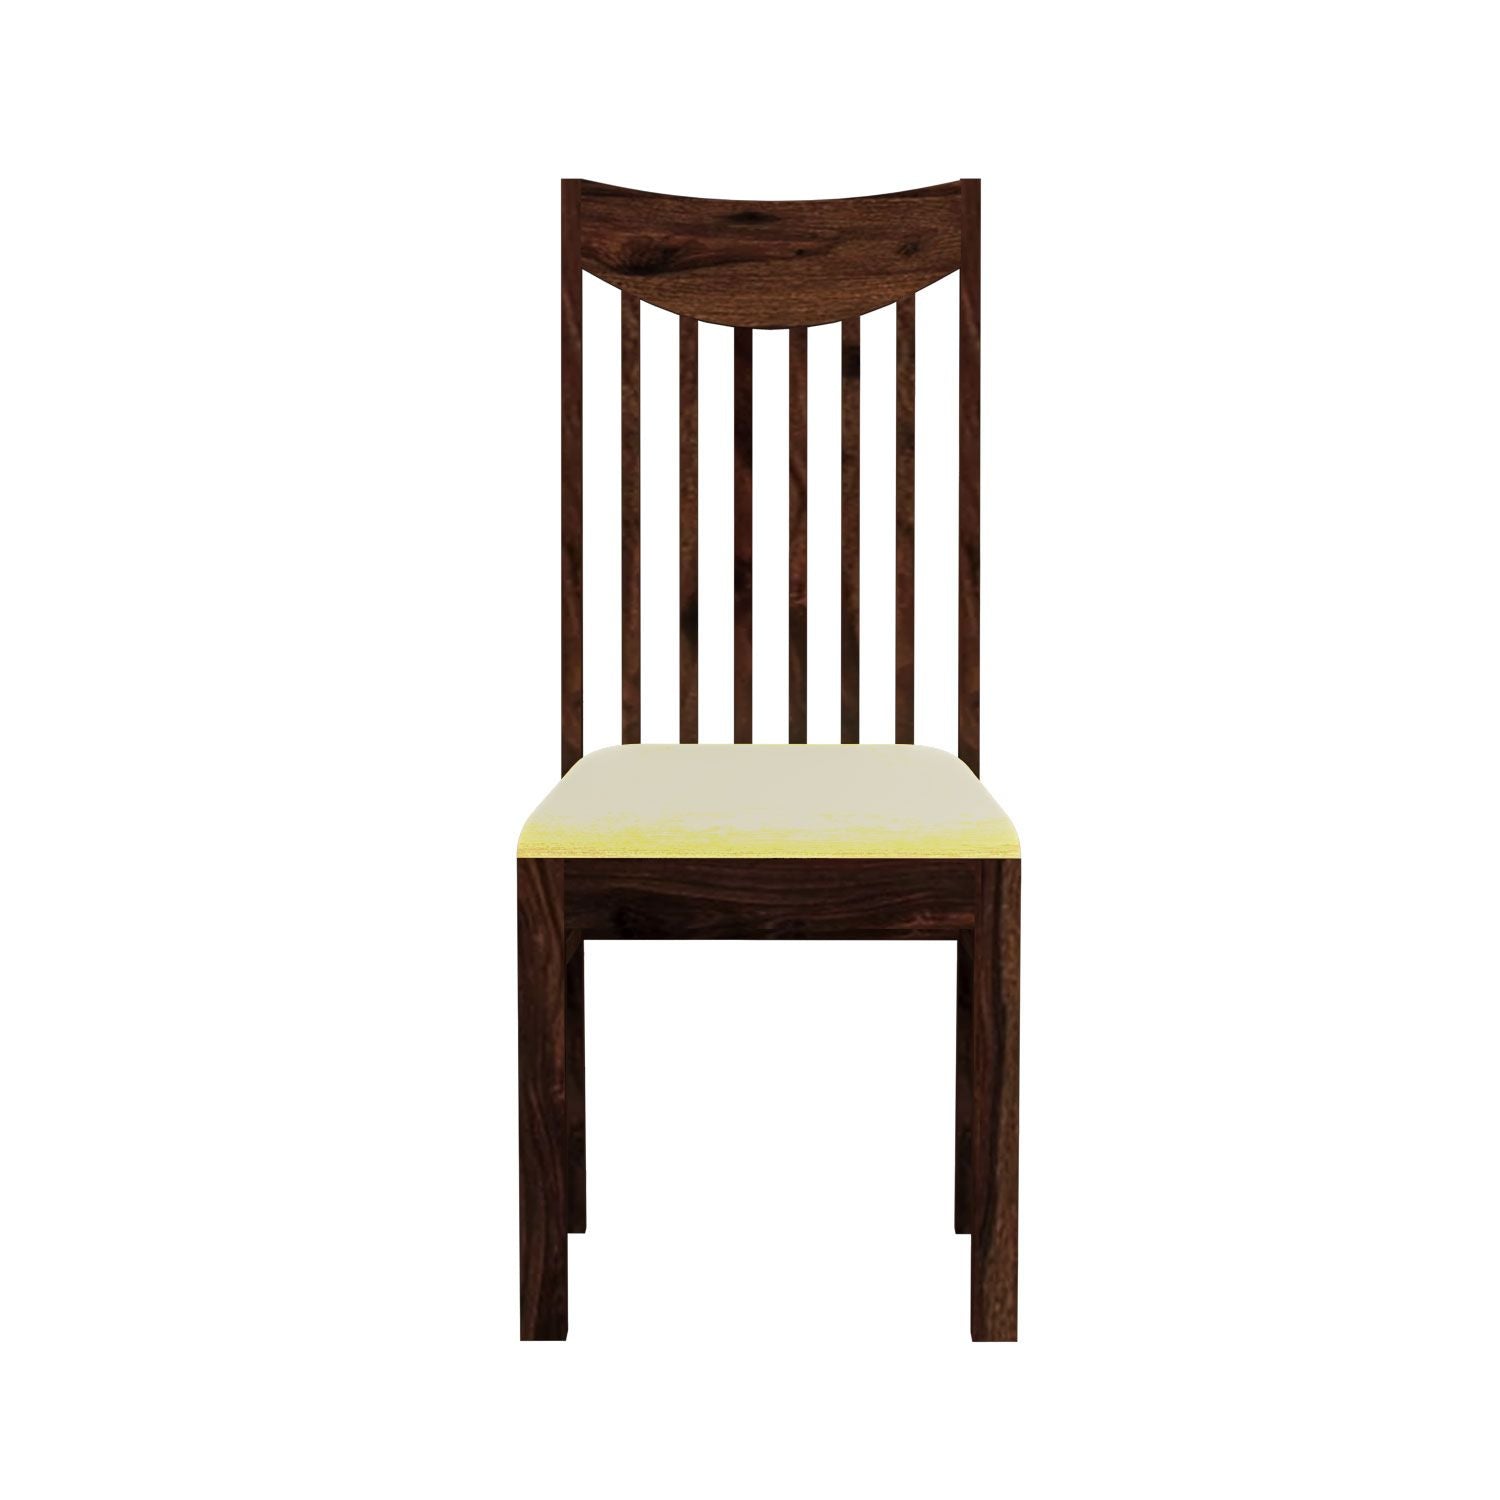 Moon Solid Sheesham Wood Chair (With Cushion, Walnut Finish)